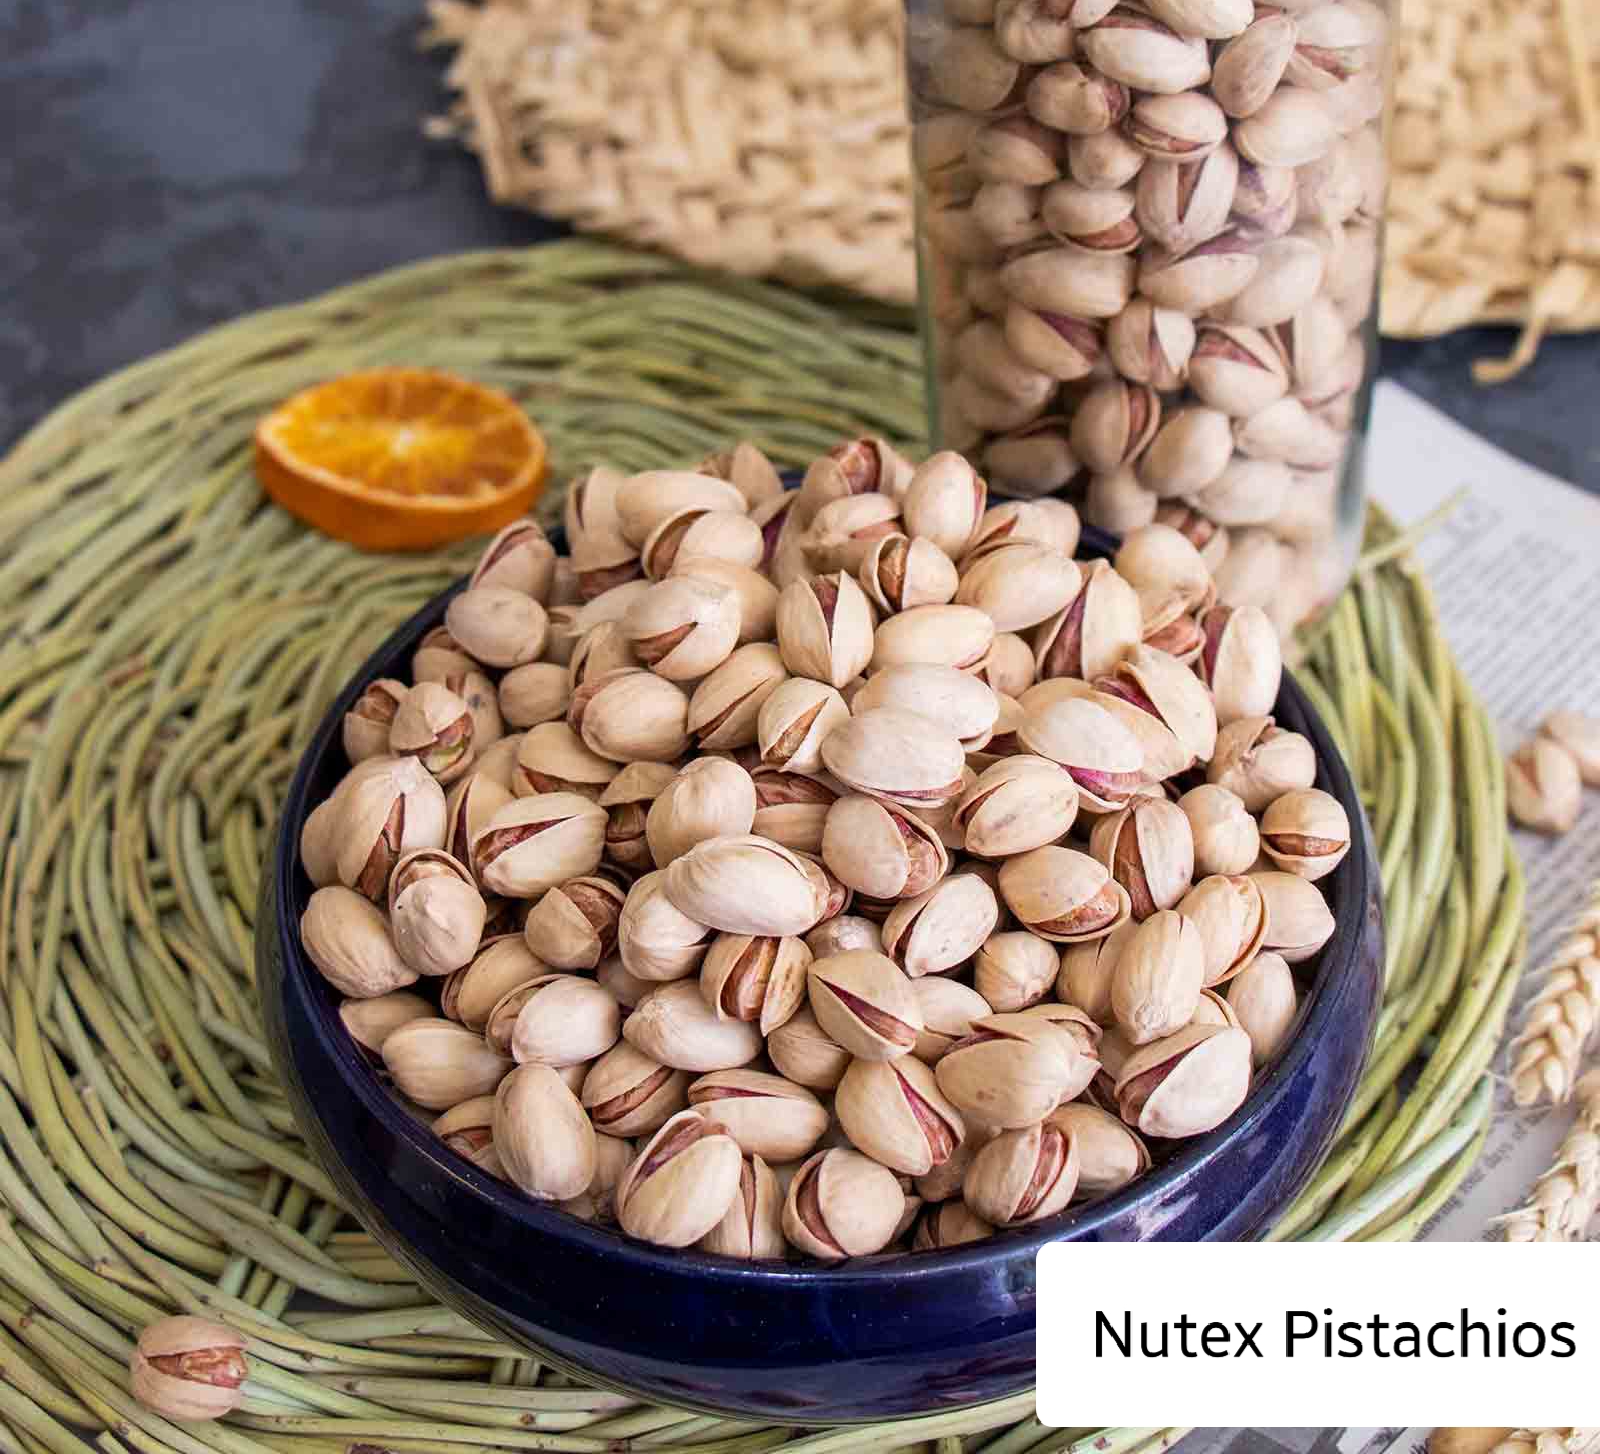 Export of Iranian Fandoghi pistachios